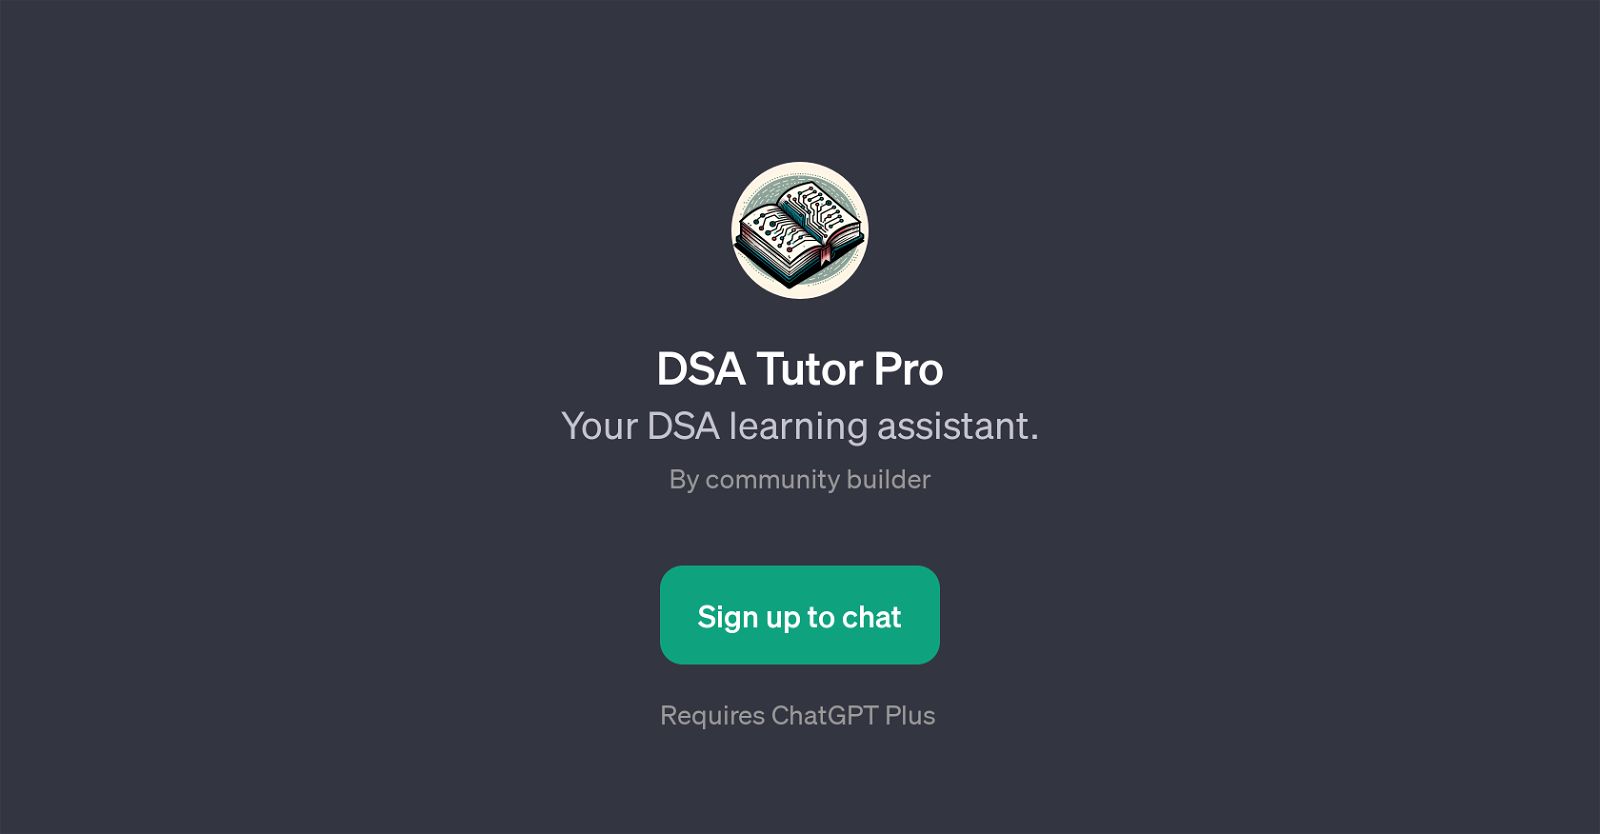 DSA Tutor Pro website